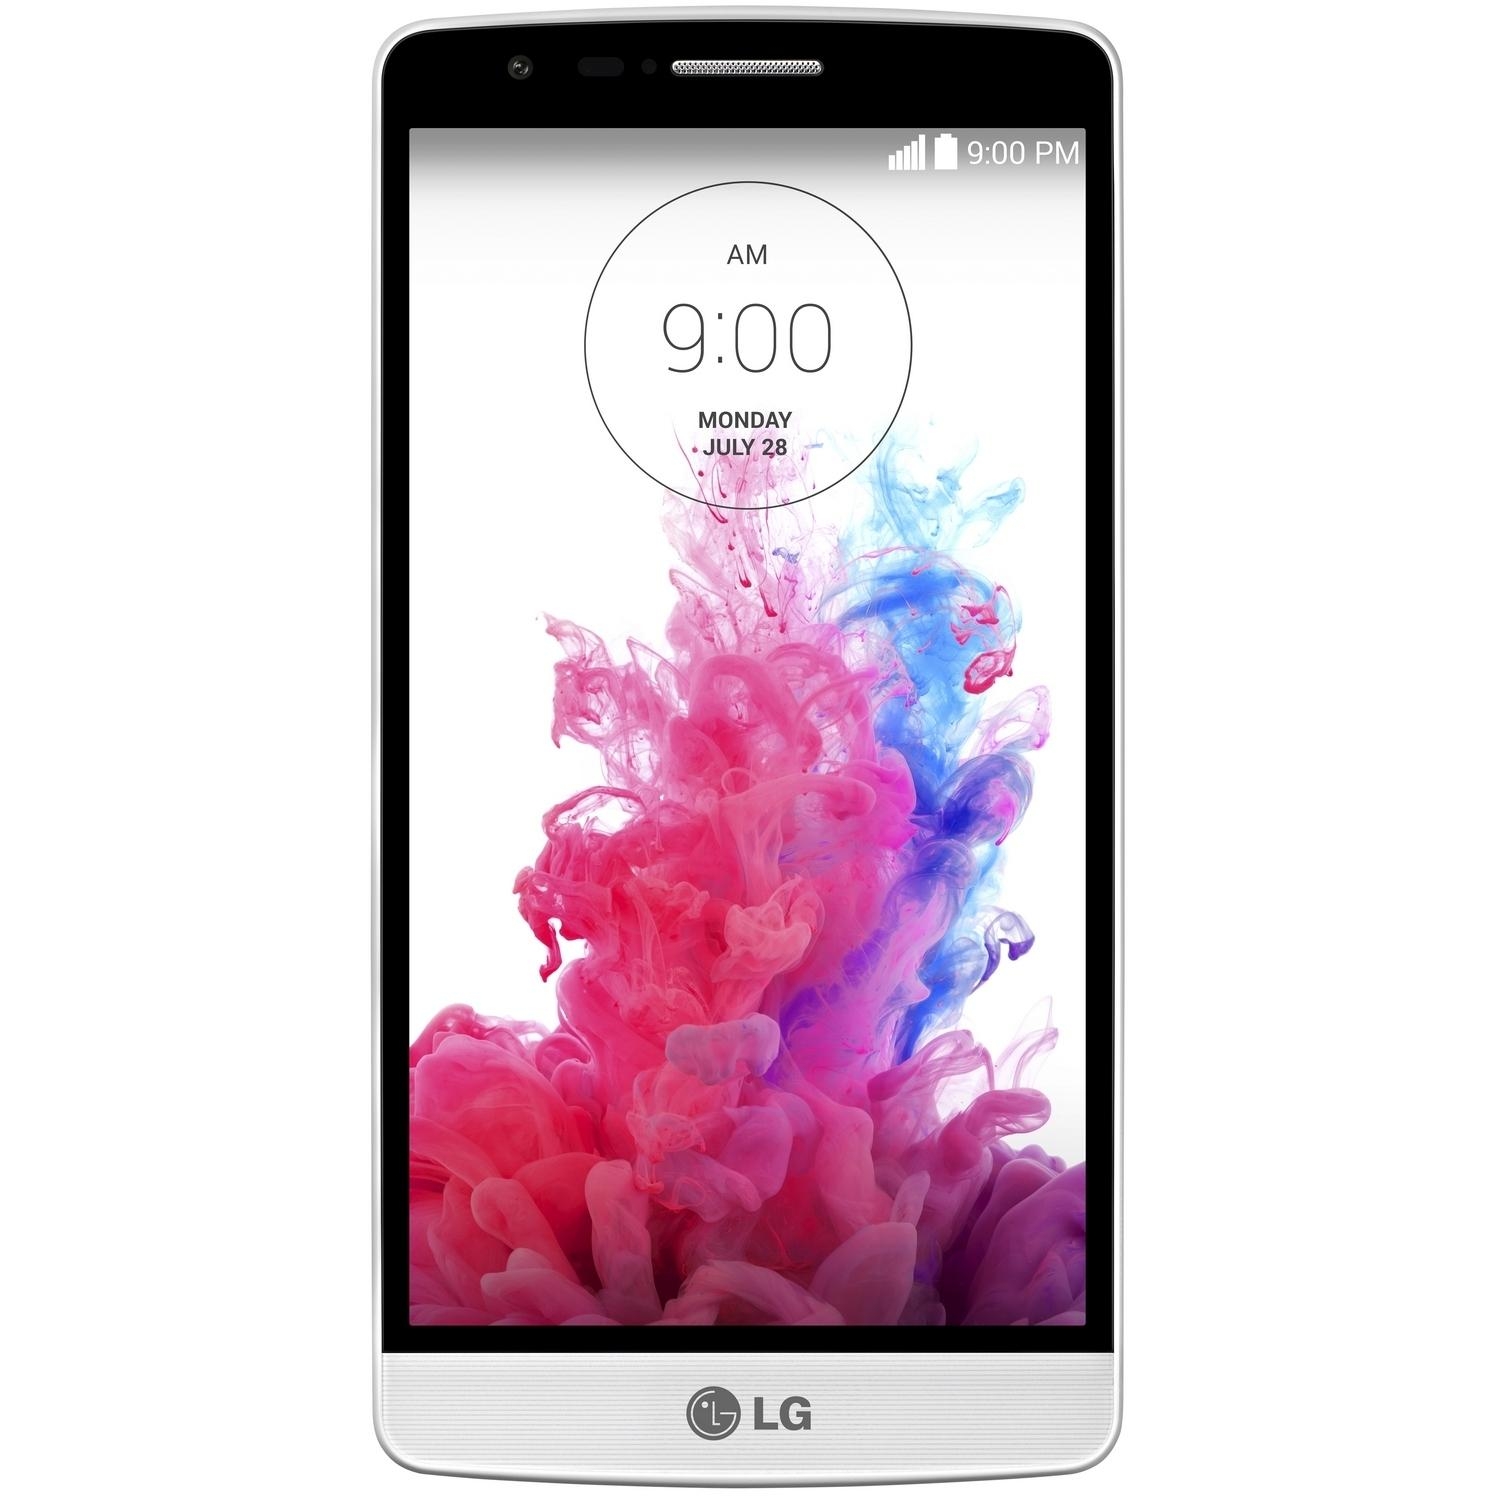 LG D724 G3 s (Silk White) - зображення 1